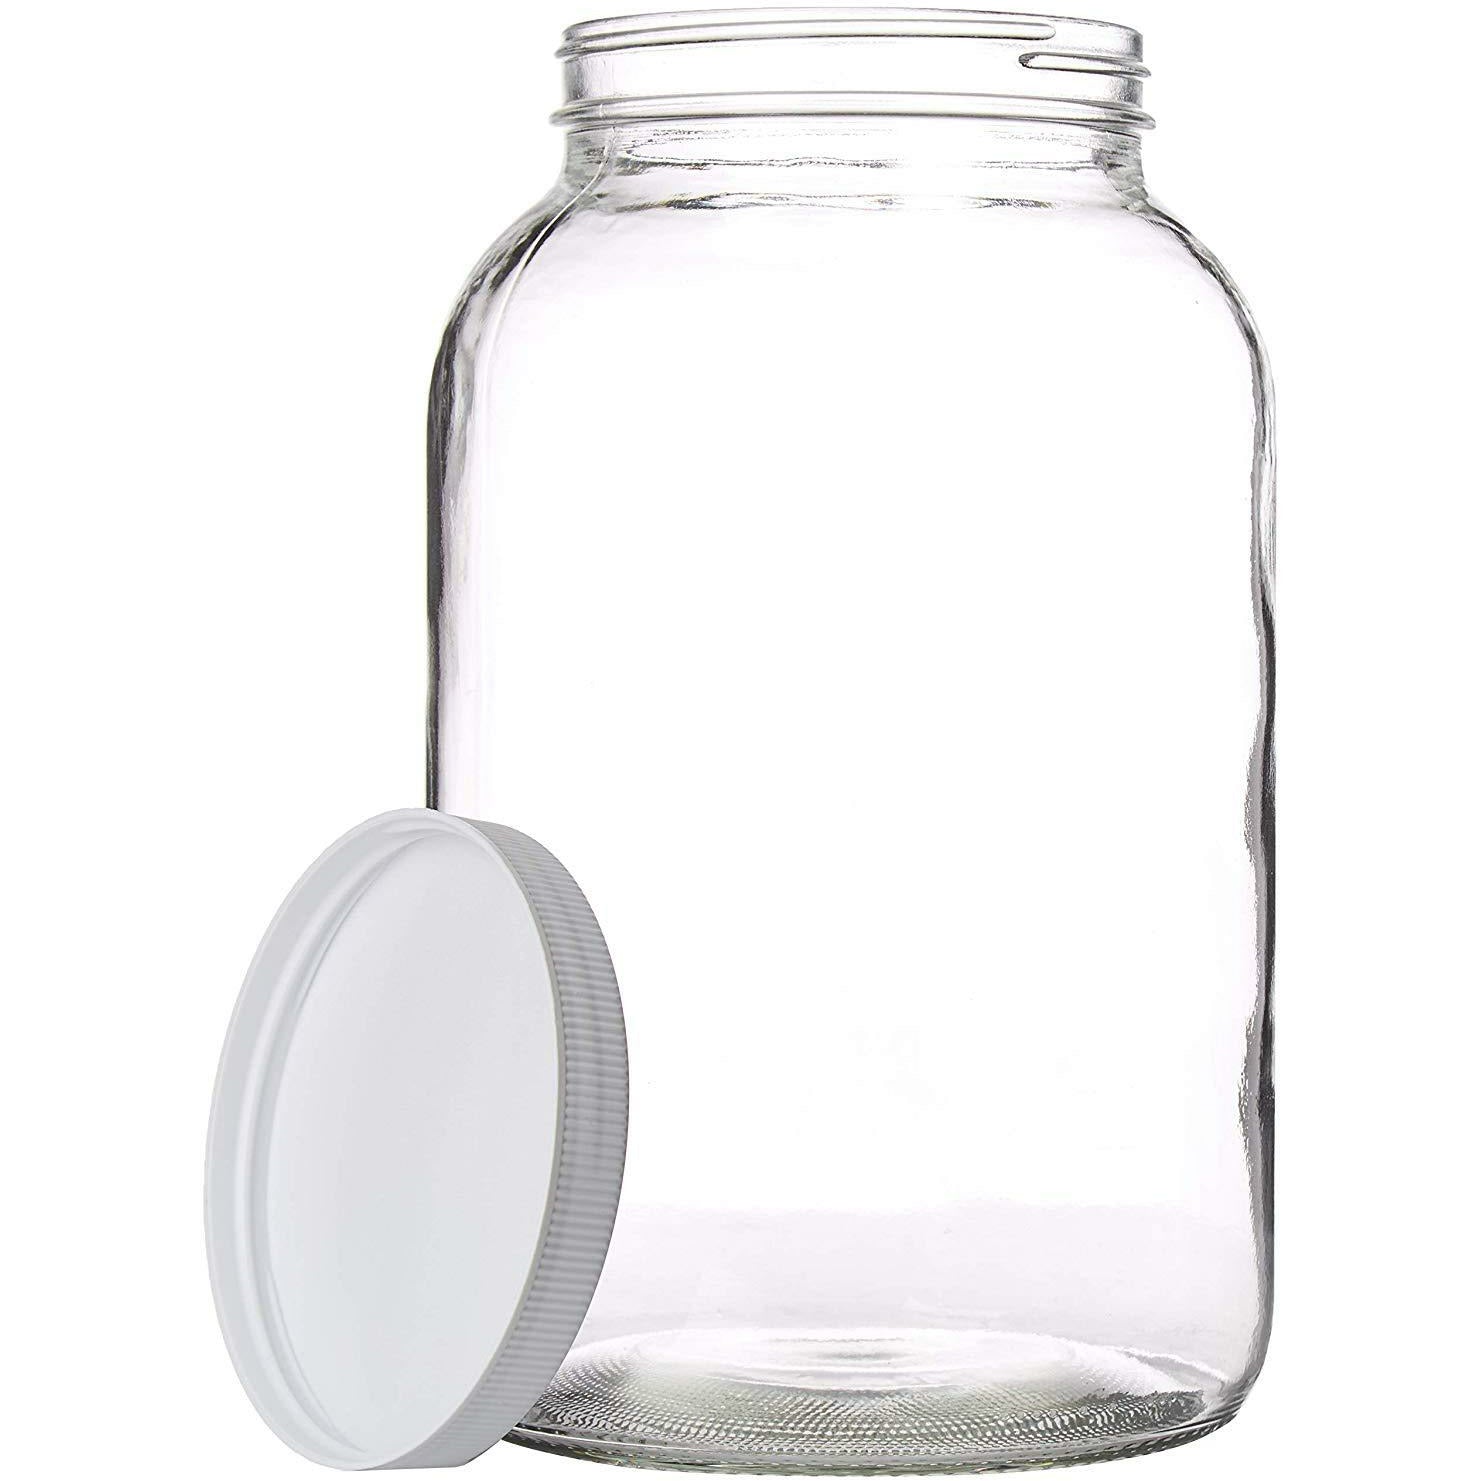 2 Pack - 1 Gallon Mason Jar - Glass Jar Wide Mouth with Airtight Foam Lined Plastic Lid - Safe Mason Jar for Fermenting Kombucha Kefir - Pickling